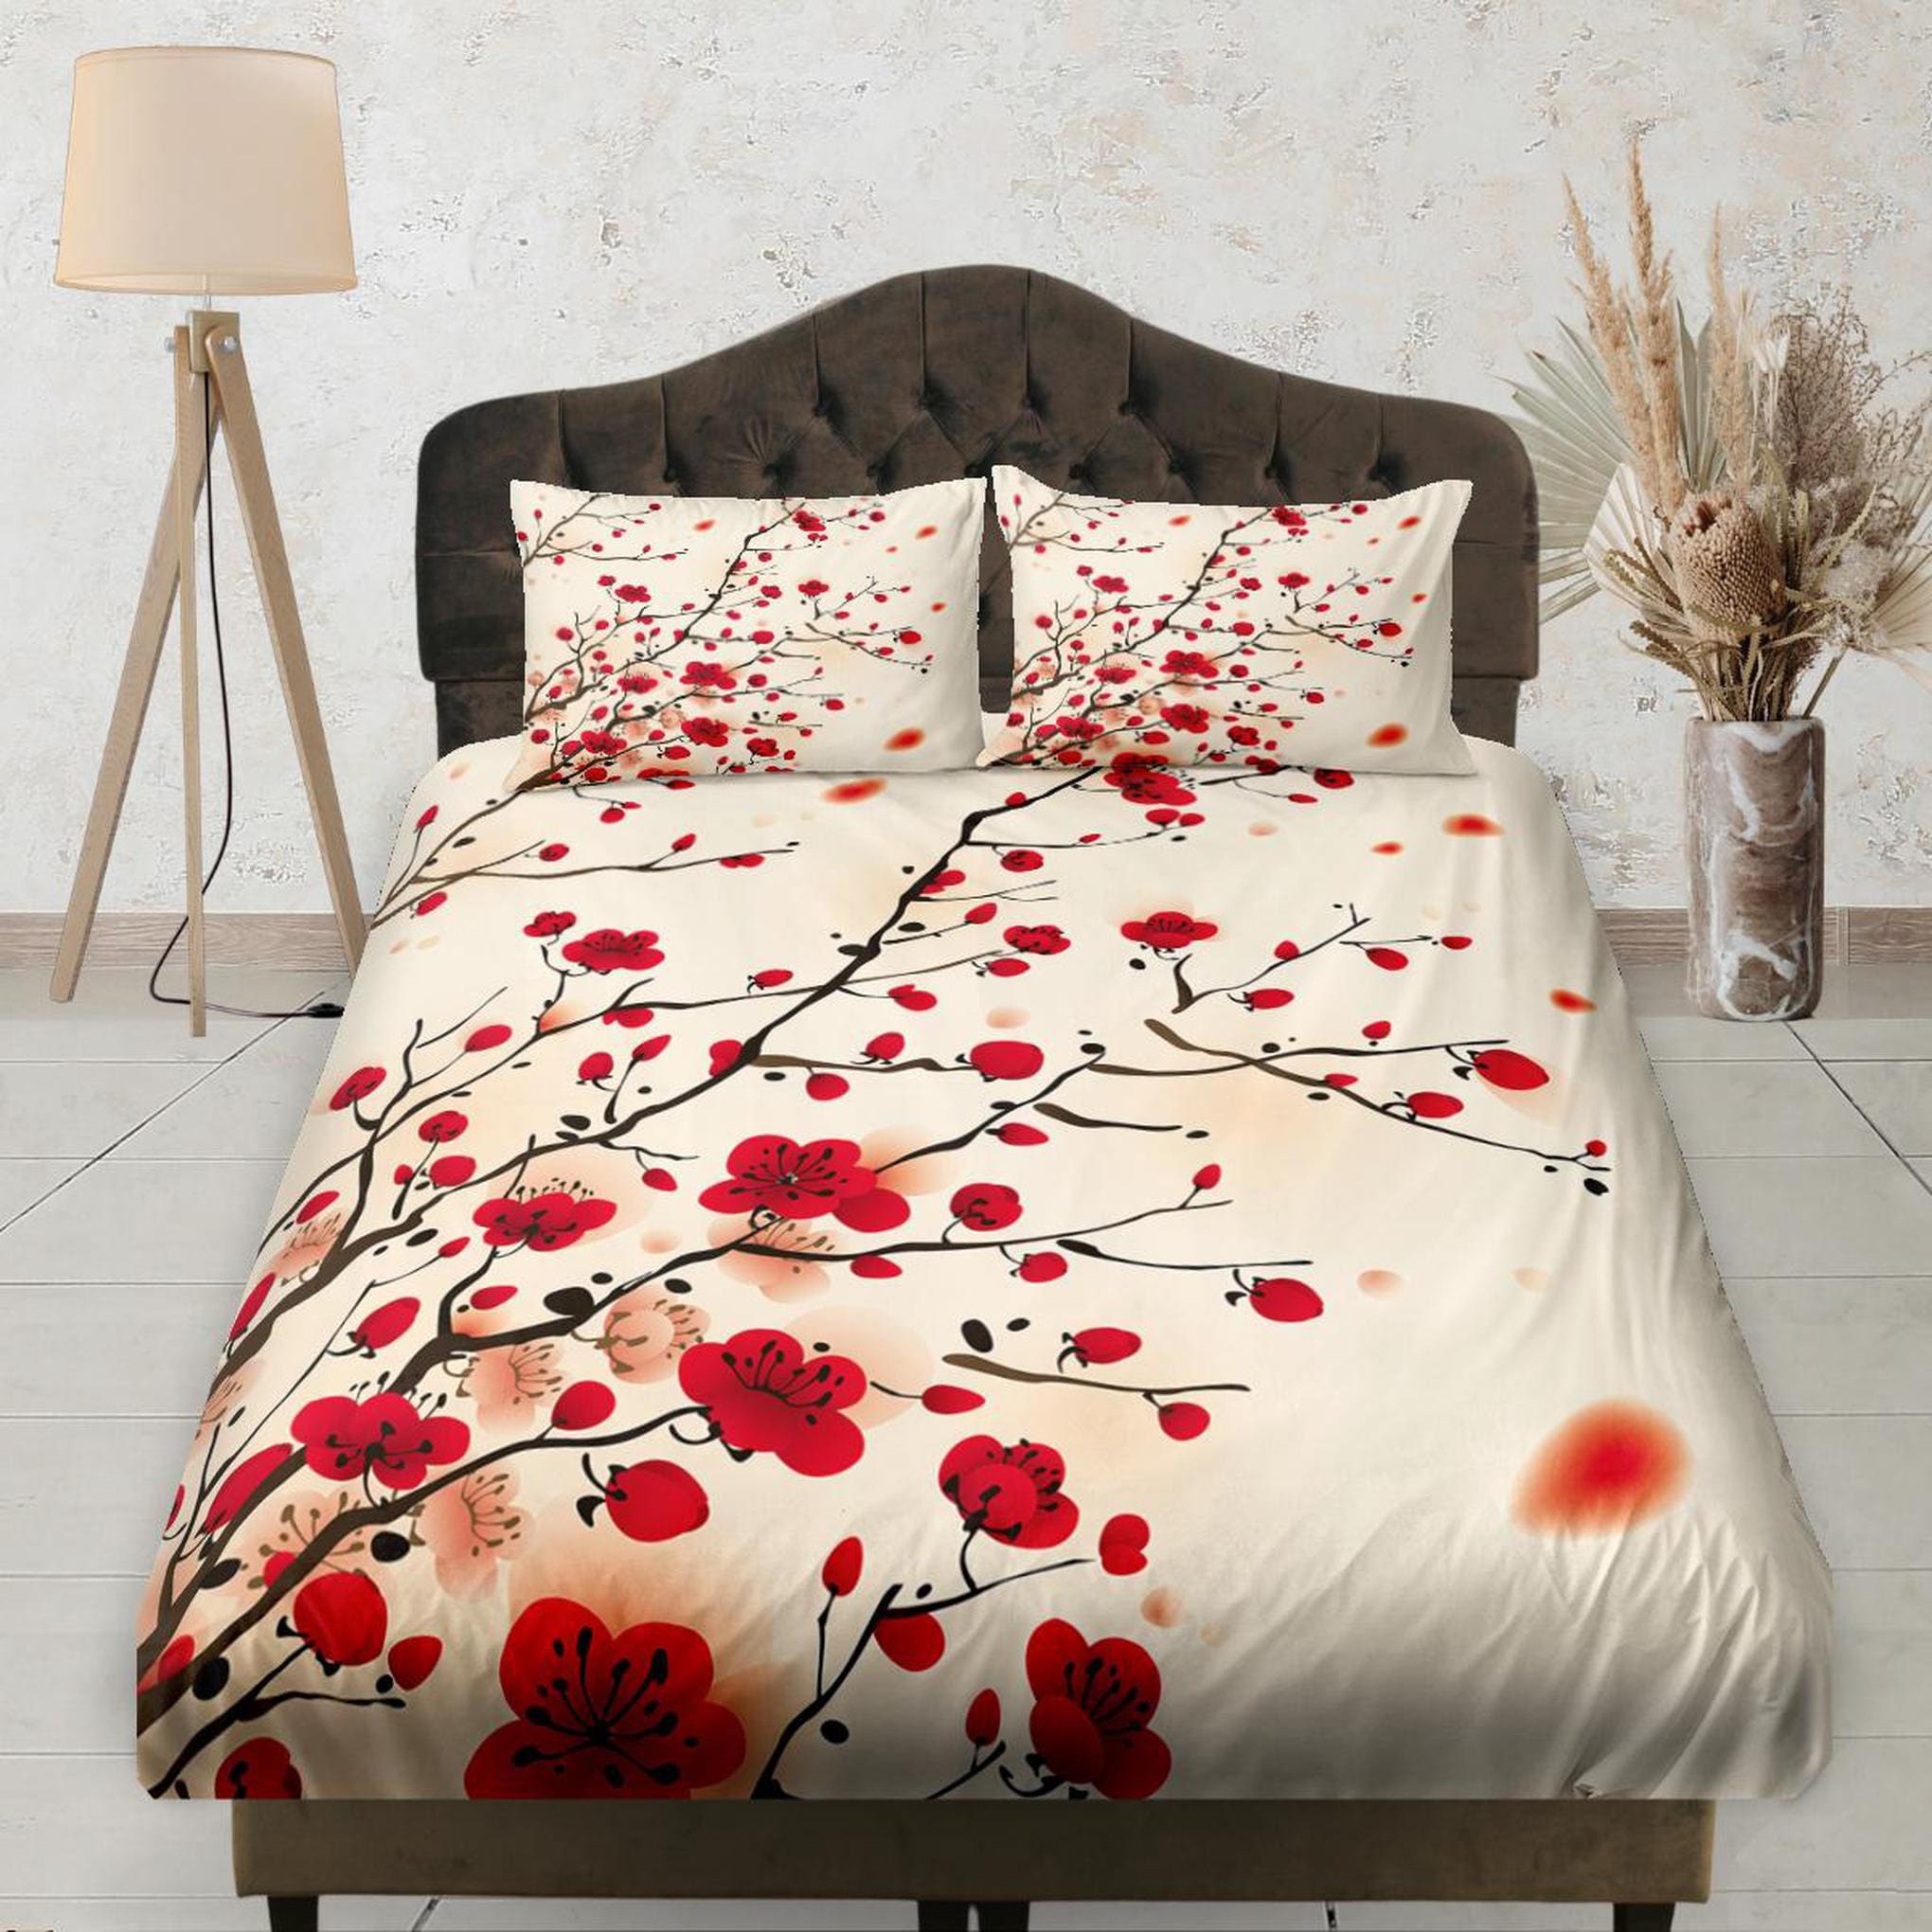 daintyduvet Red Cherry Blossoms Fitted Bedsheet Elastic Deep Pocket, Floral Printed Boho Bedding Set Full, Dorm Bedding, Crib Sheet, Shabby Chic Bedding